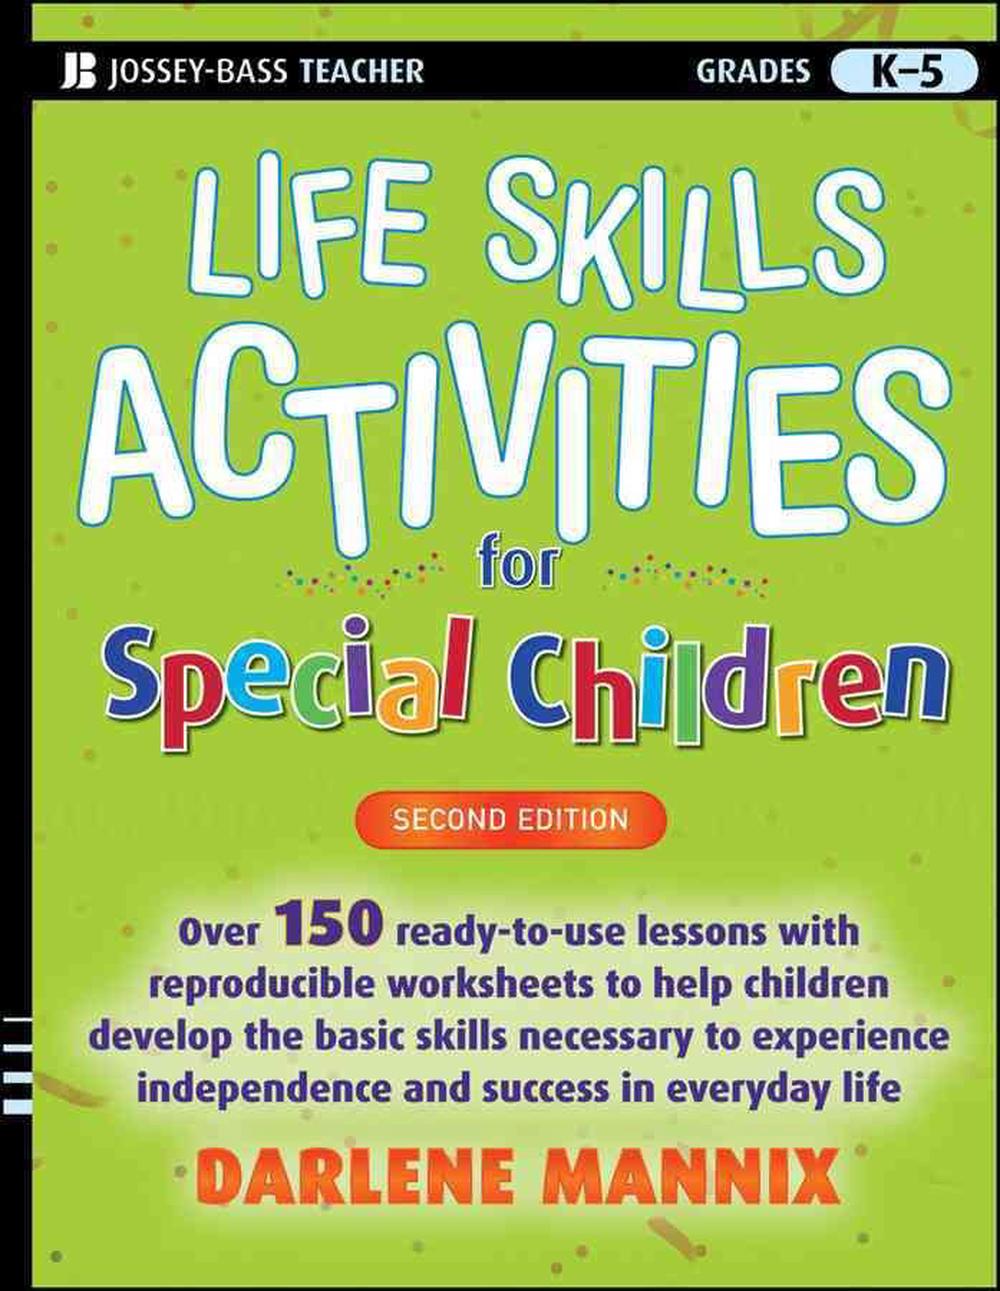 Life Skills Activities for Special Children, Grades K-5 by Darlene